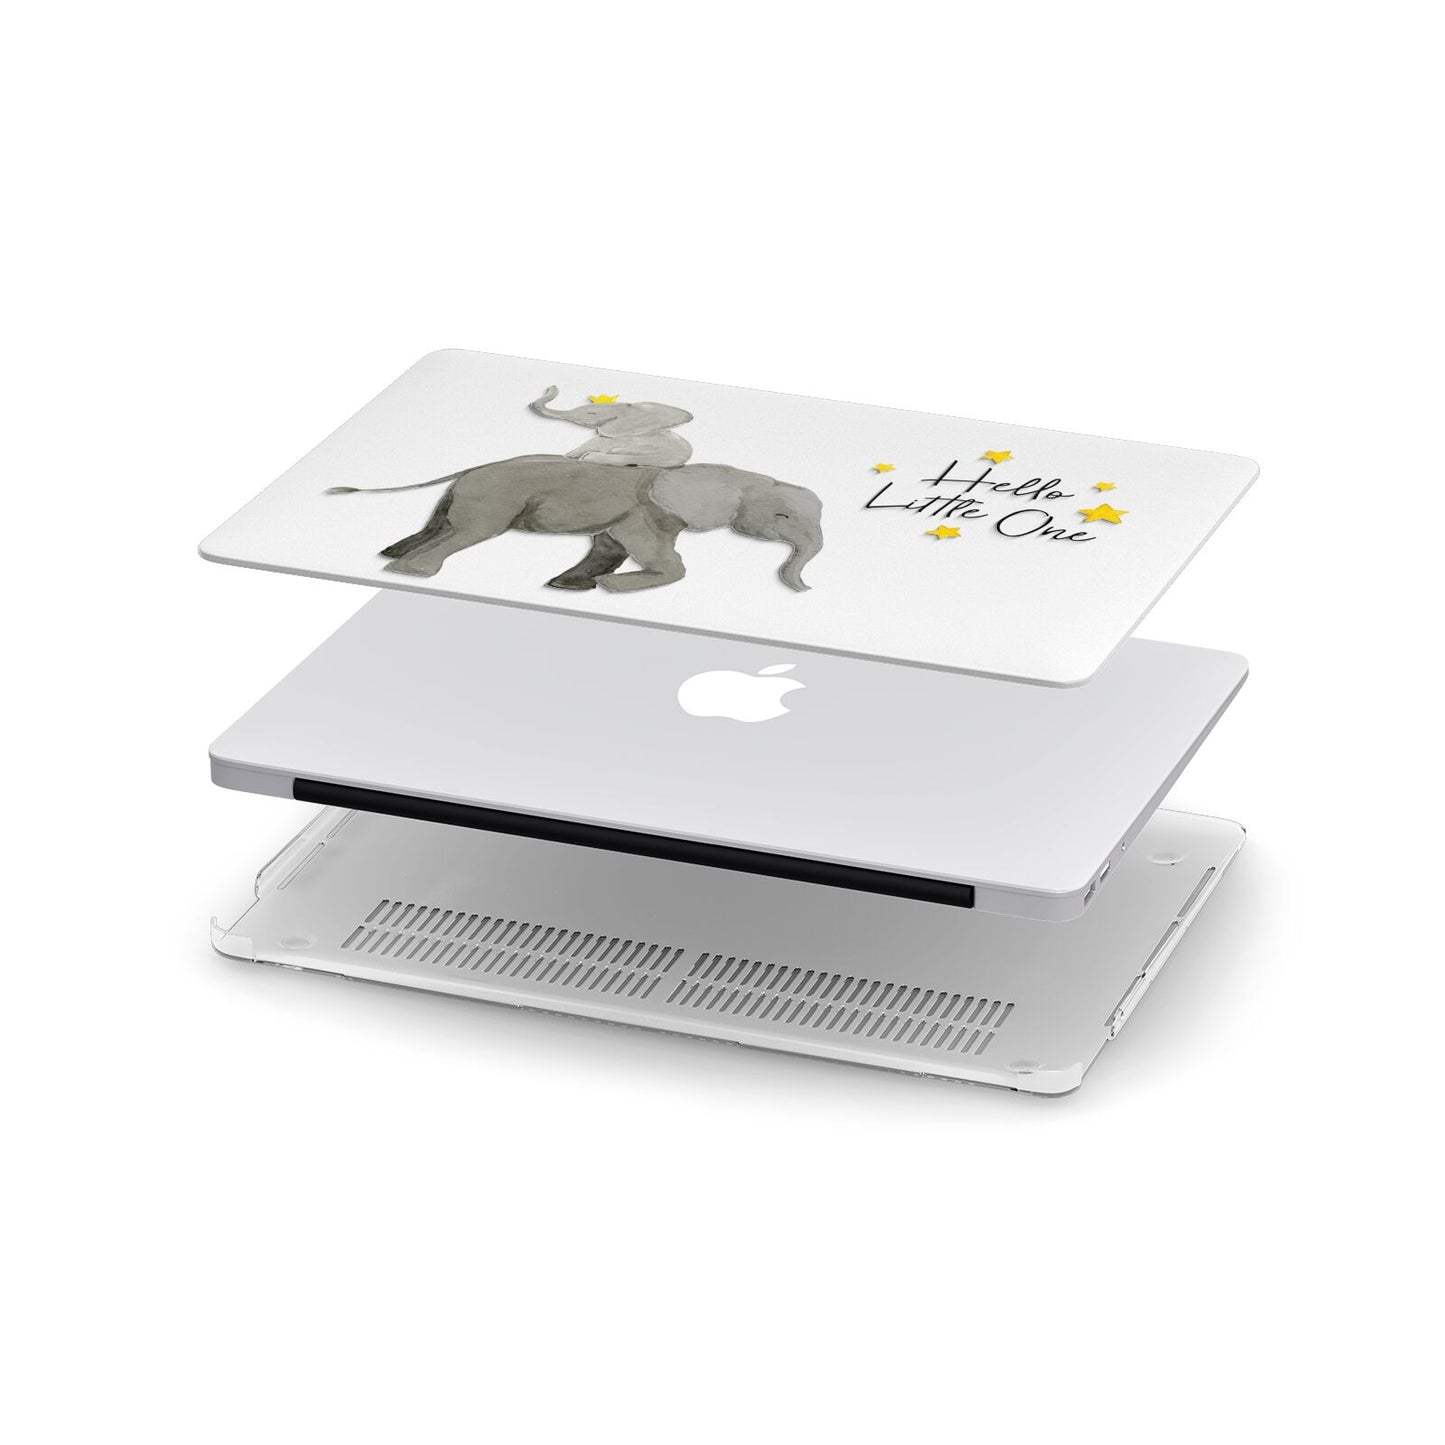 Baby Elephant Apple MacBook Case in Detail